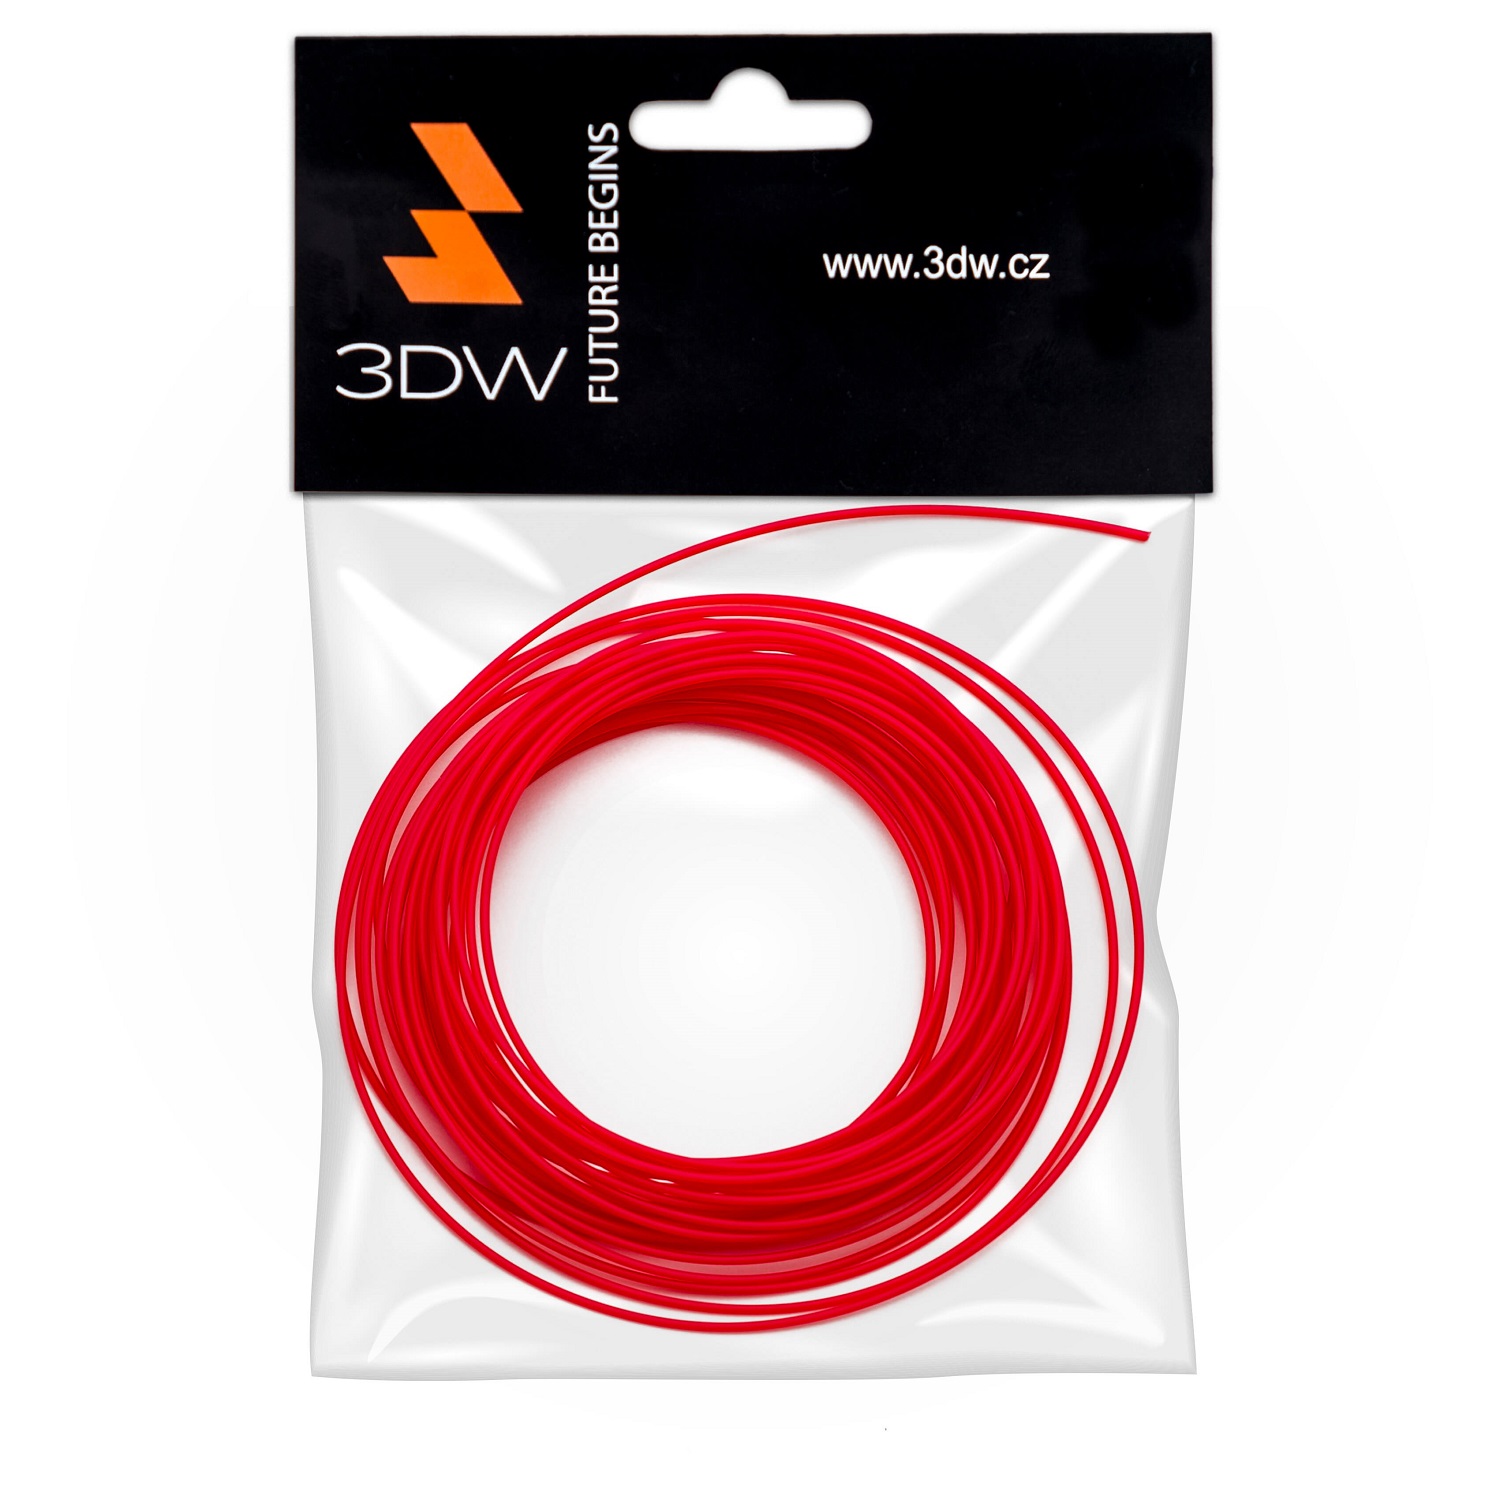 Obrázek 3DW - ABS filament 1,75mm červená, 10m, tisk 220-250°C